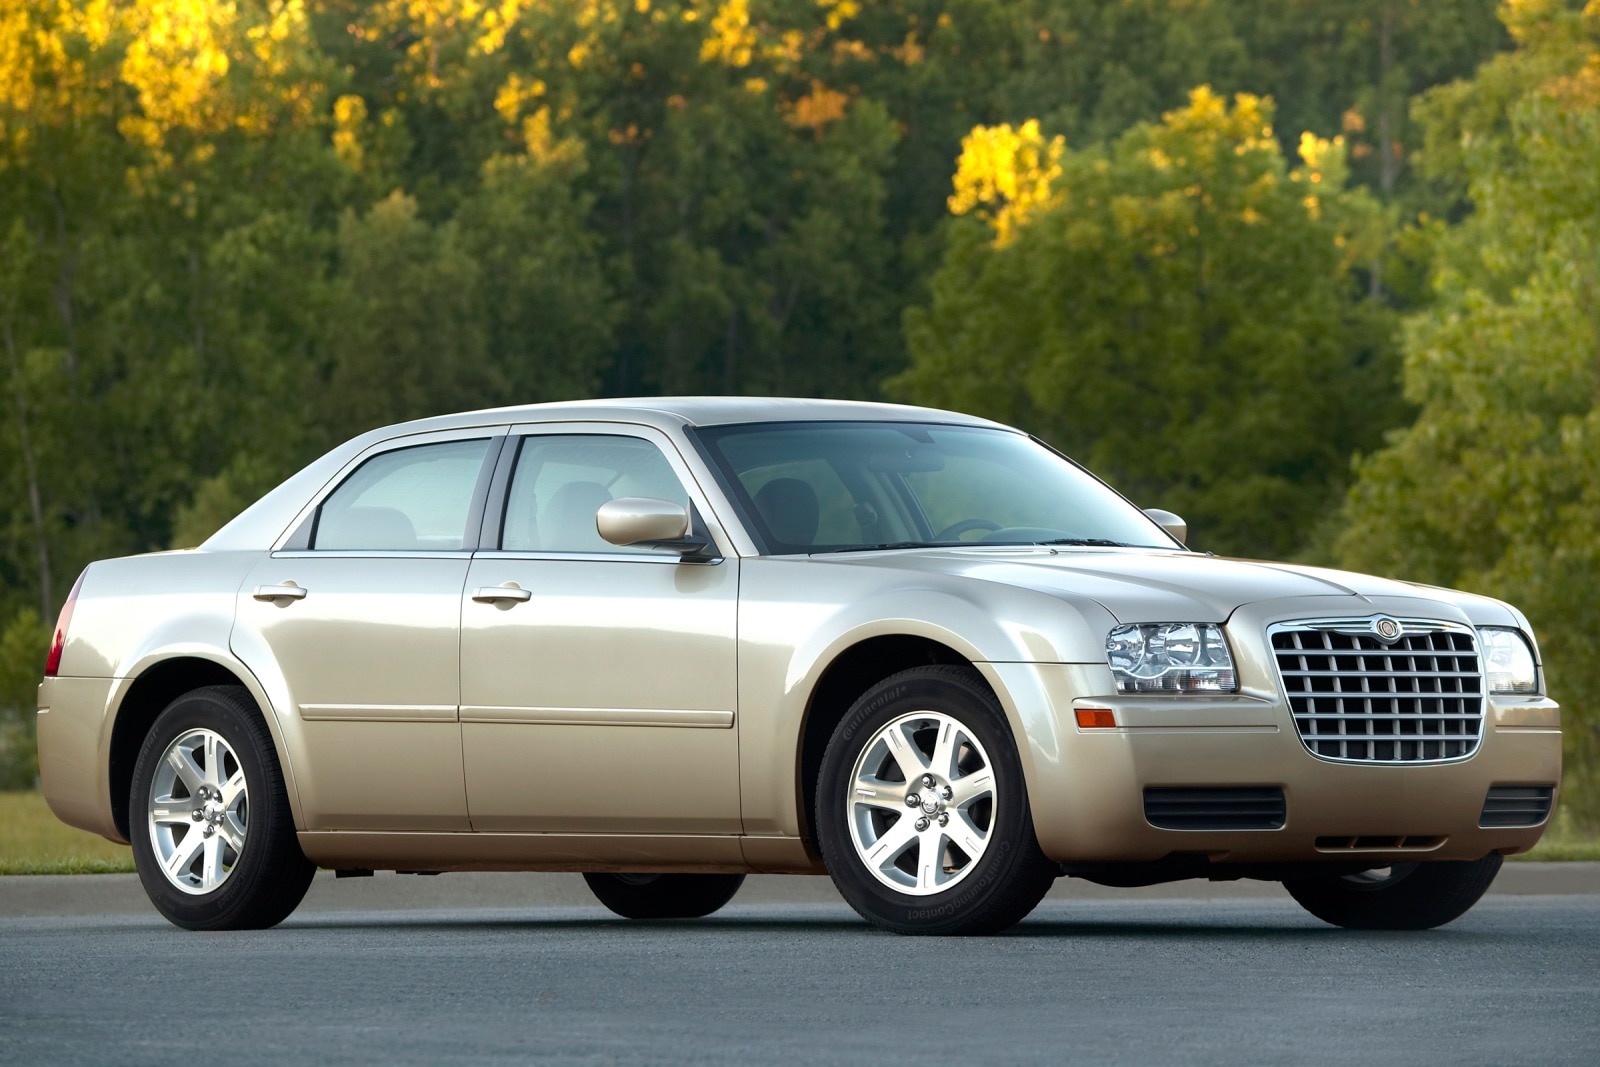 2007 Chrysler 300 Review & Ratings | Edmunds